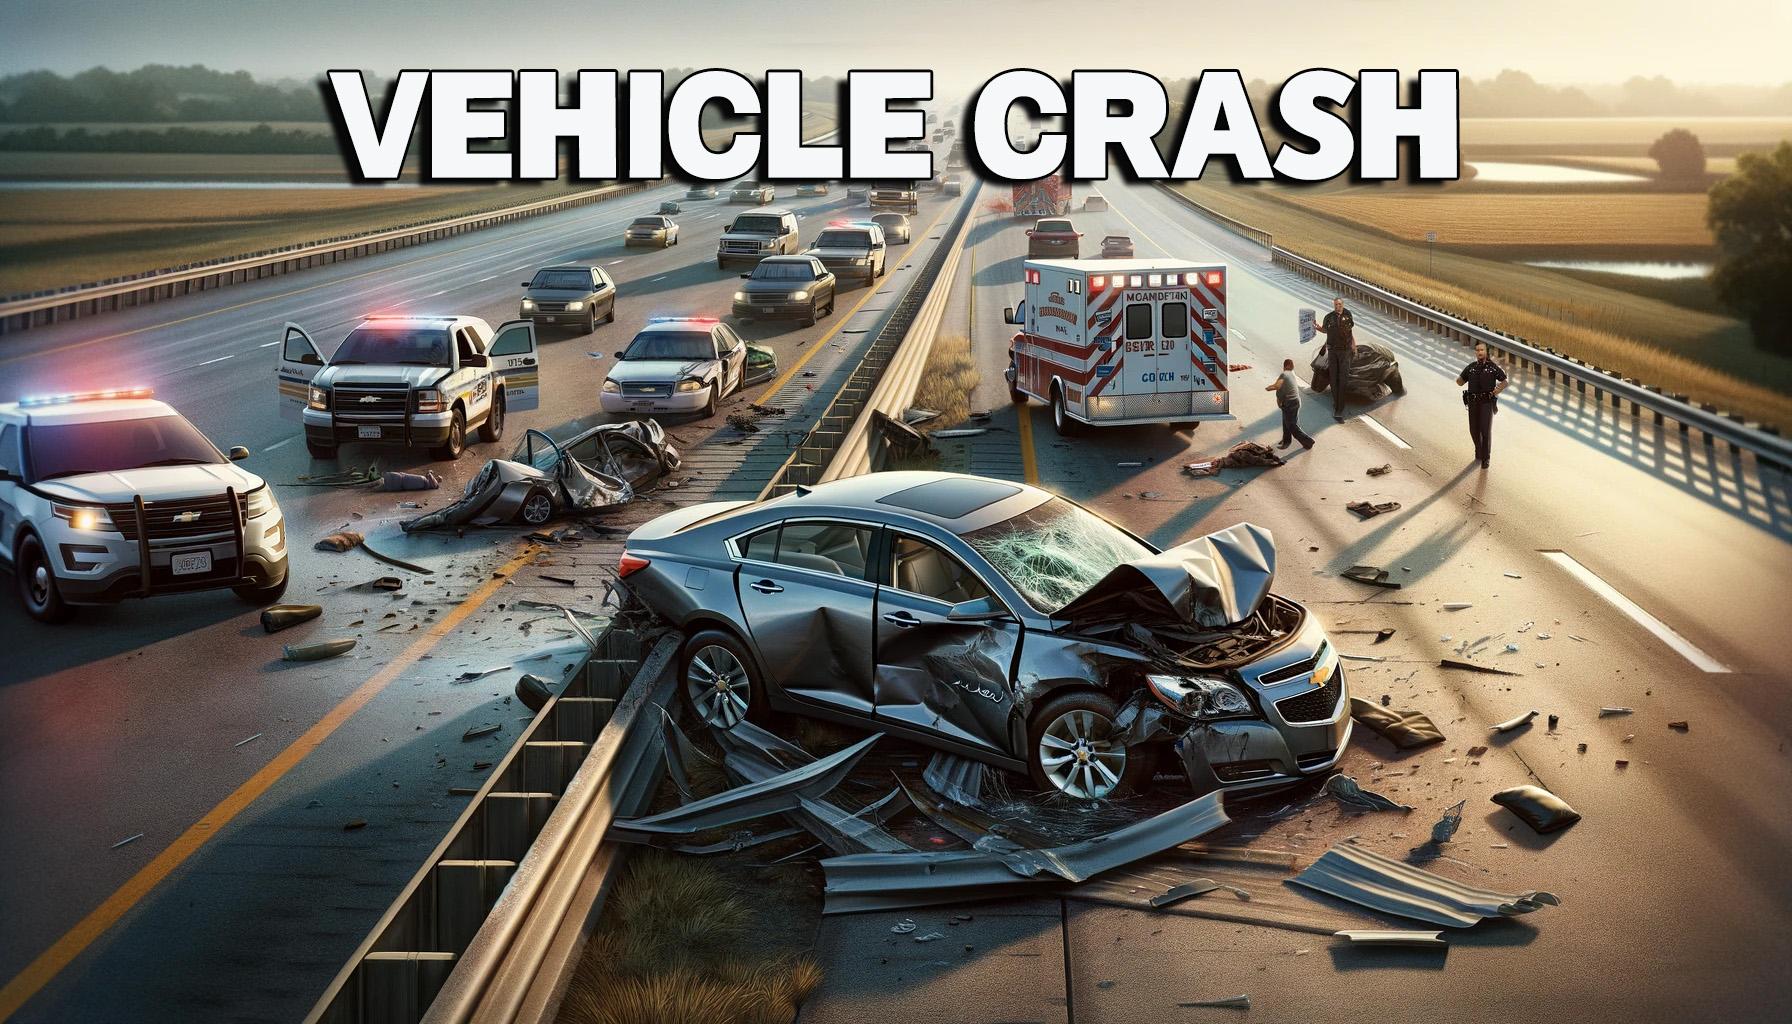 Chevy Malibu accident or crash news graphic